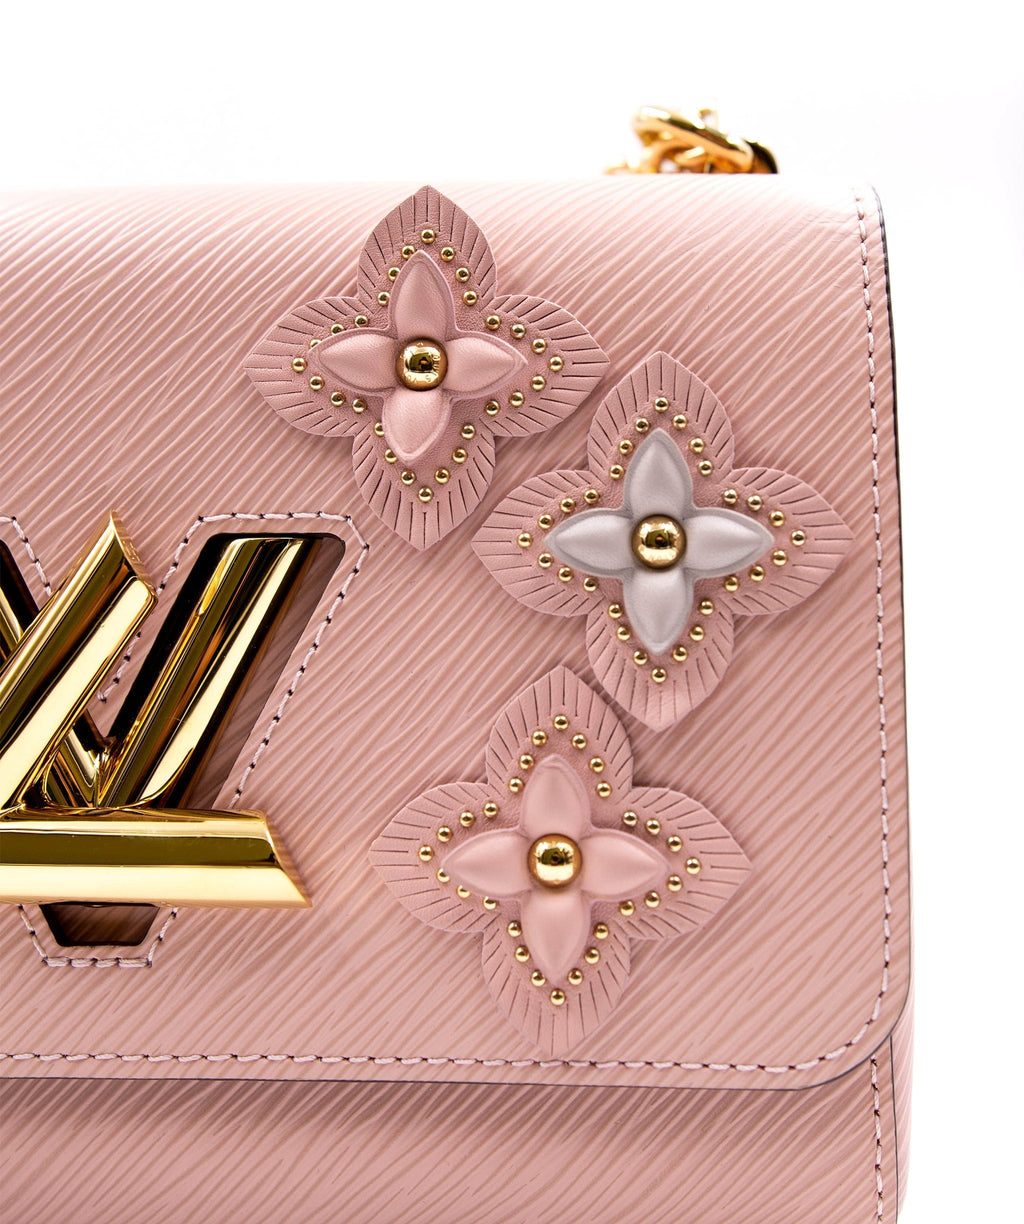 Louis Vuitton Limited Edition Twist Bloom Flower Black Epi Leather Handbag